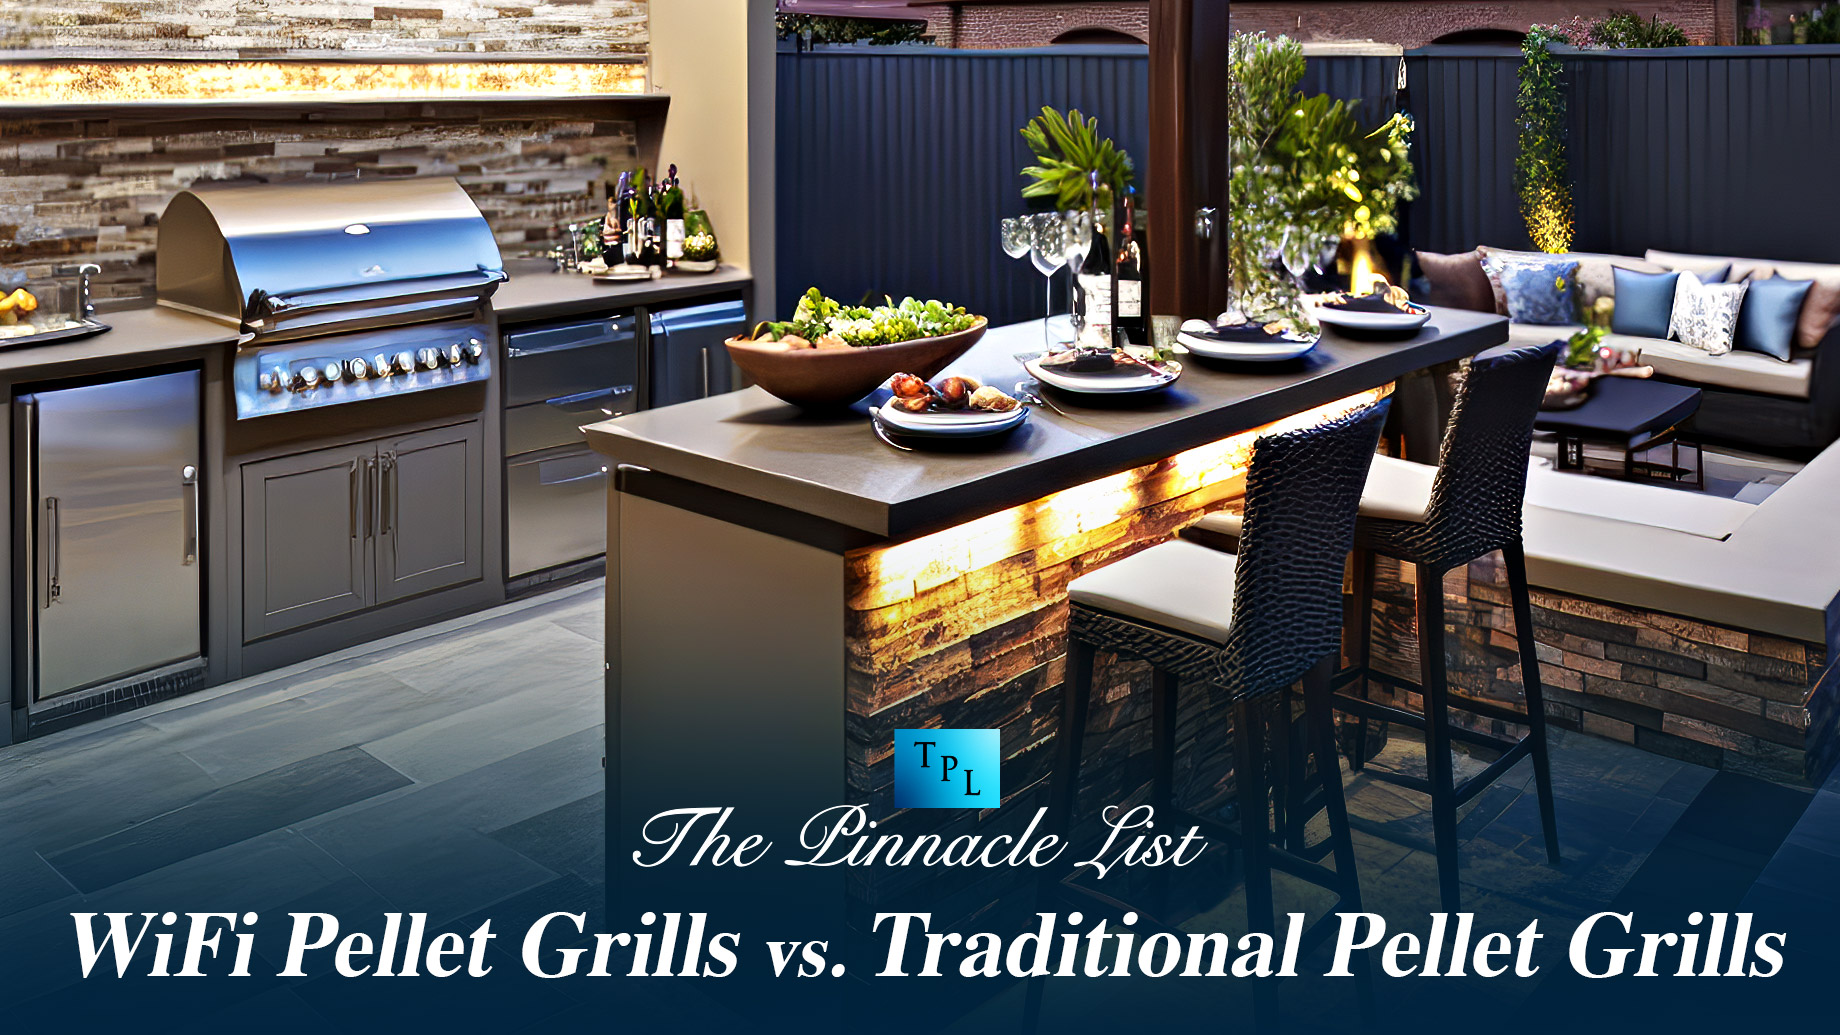 WiFi Pellet Grills vs. Traditional Pellet Grills